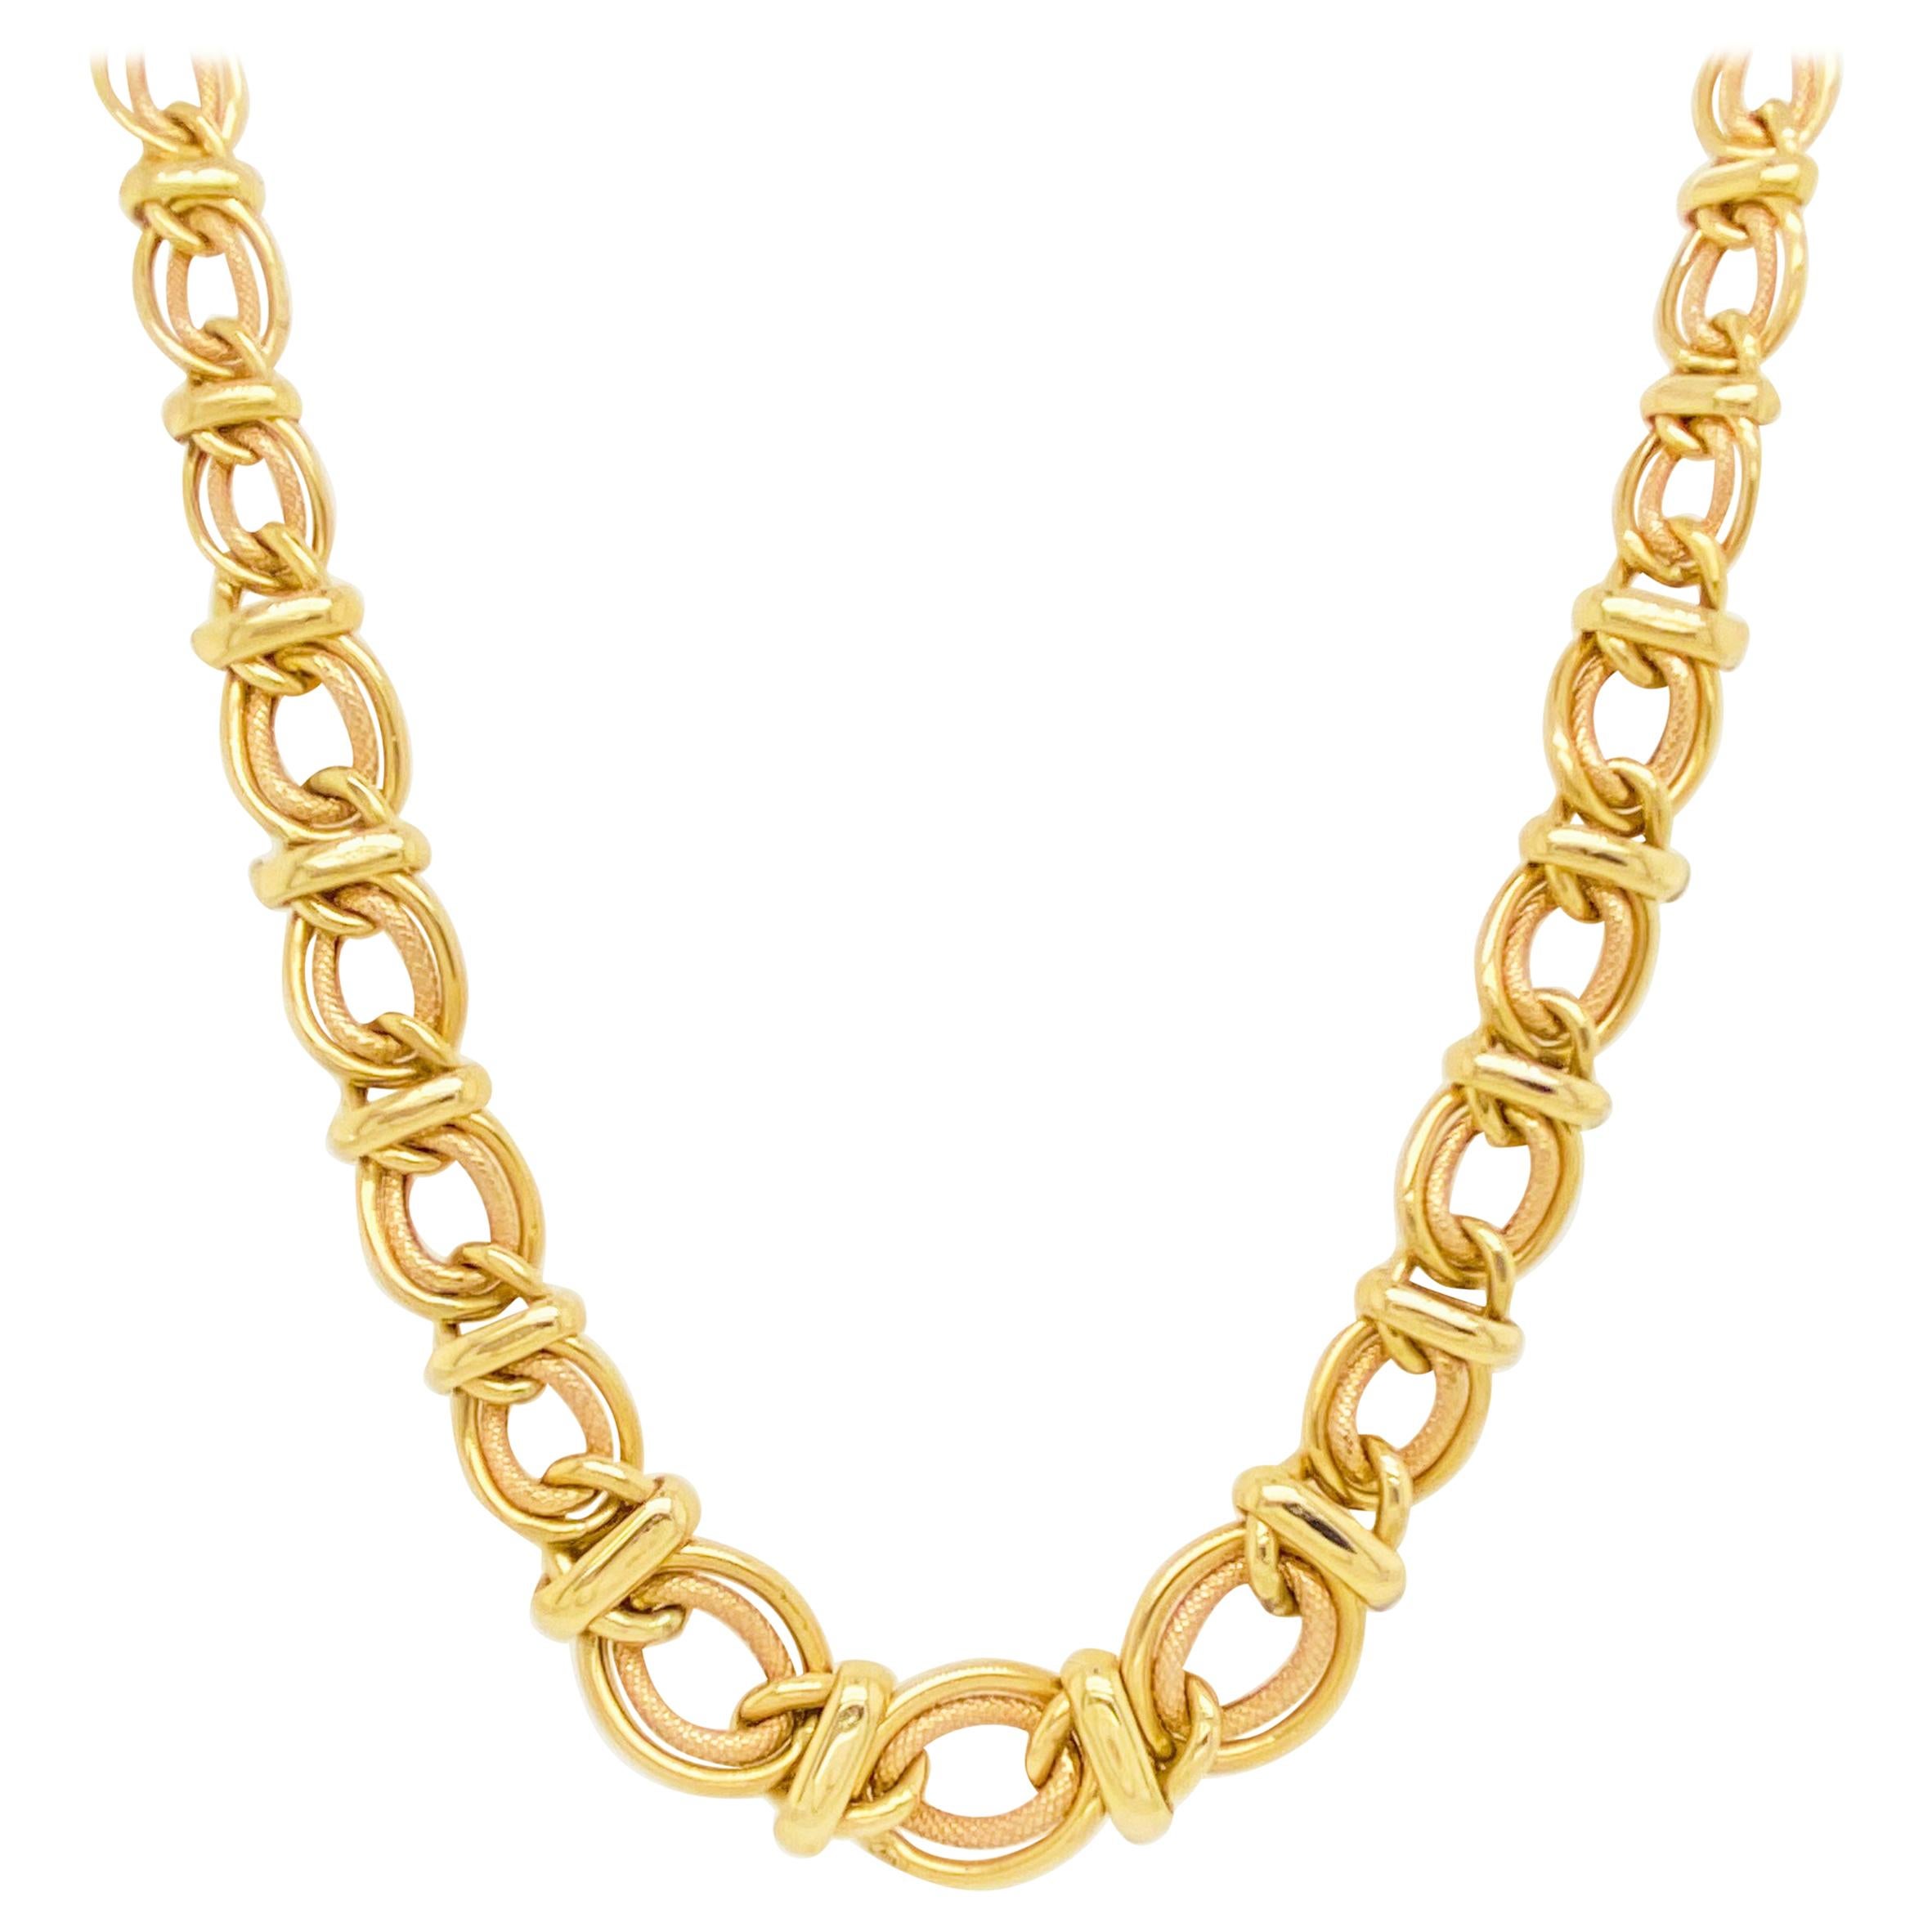 Double Link Choker Chain Necklace, 14 Karat Yellow Gold, Sailor's Knot